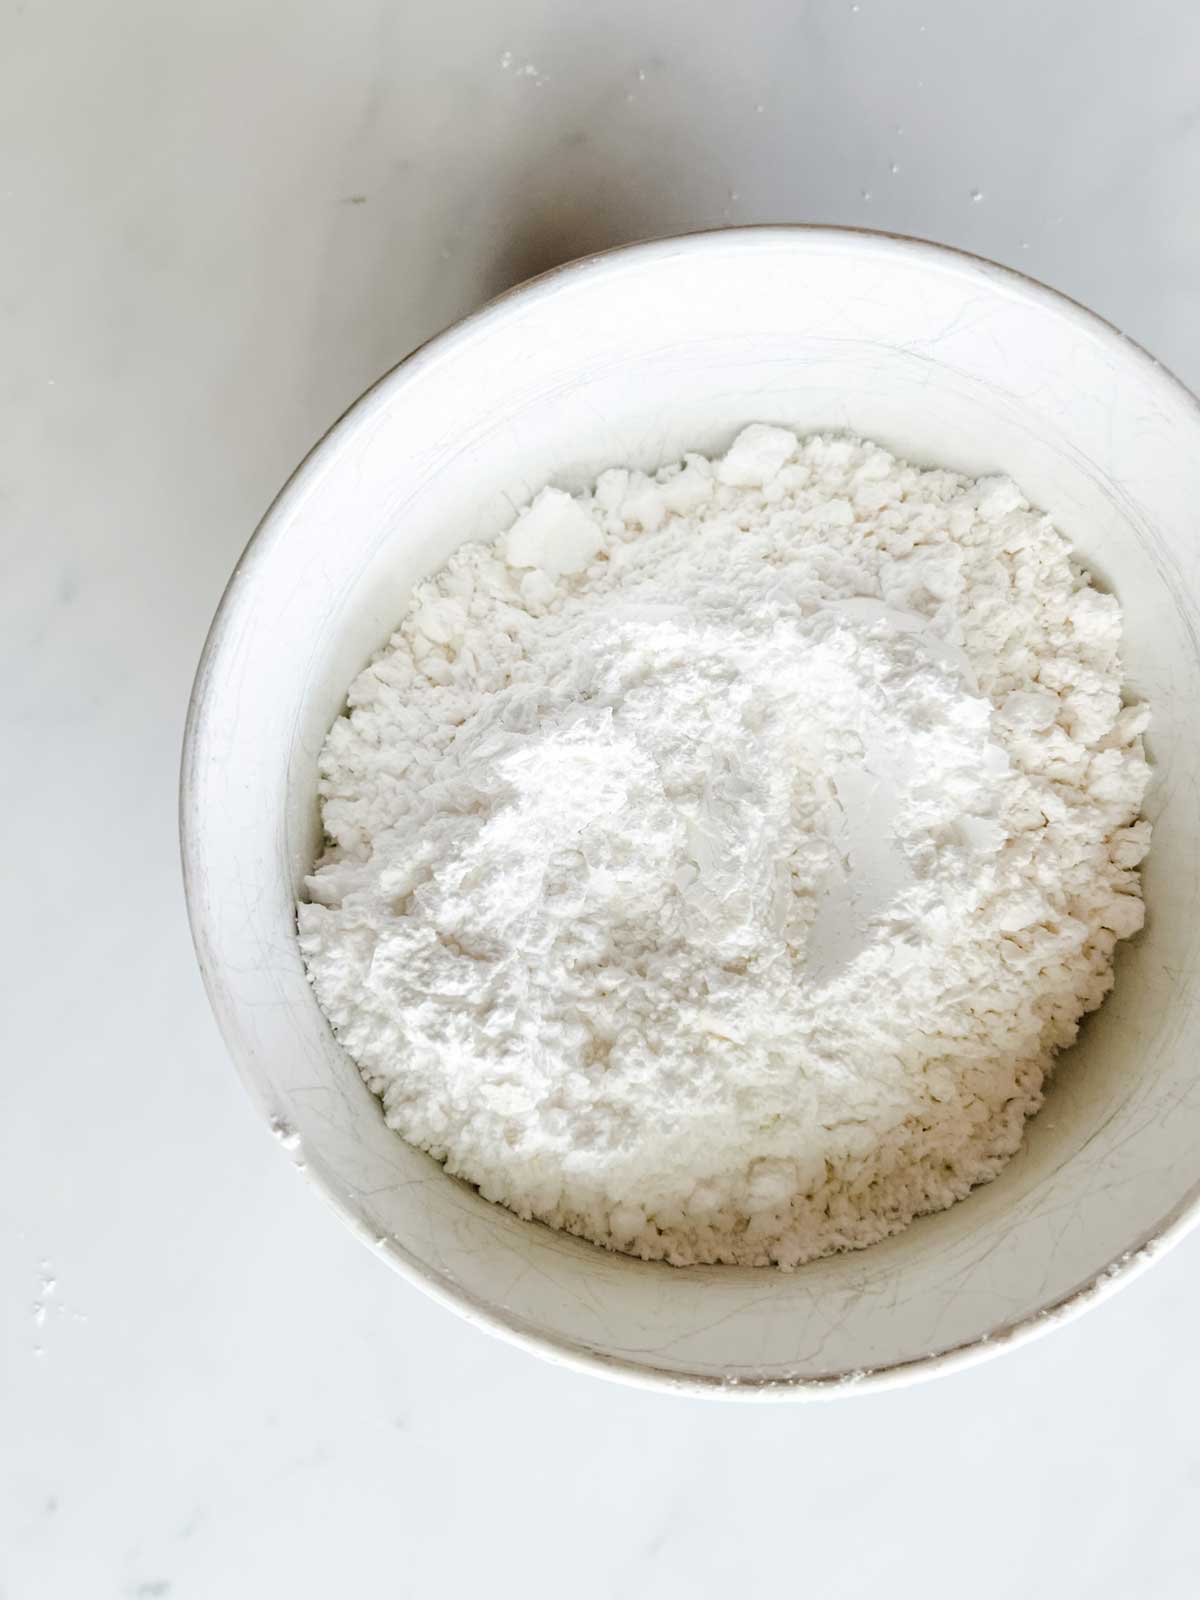 Powdered sugar in a white bowl.